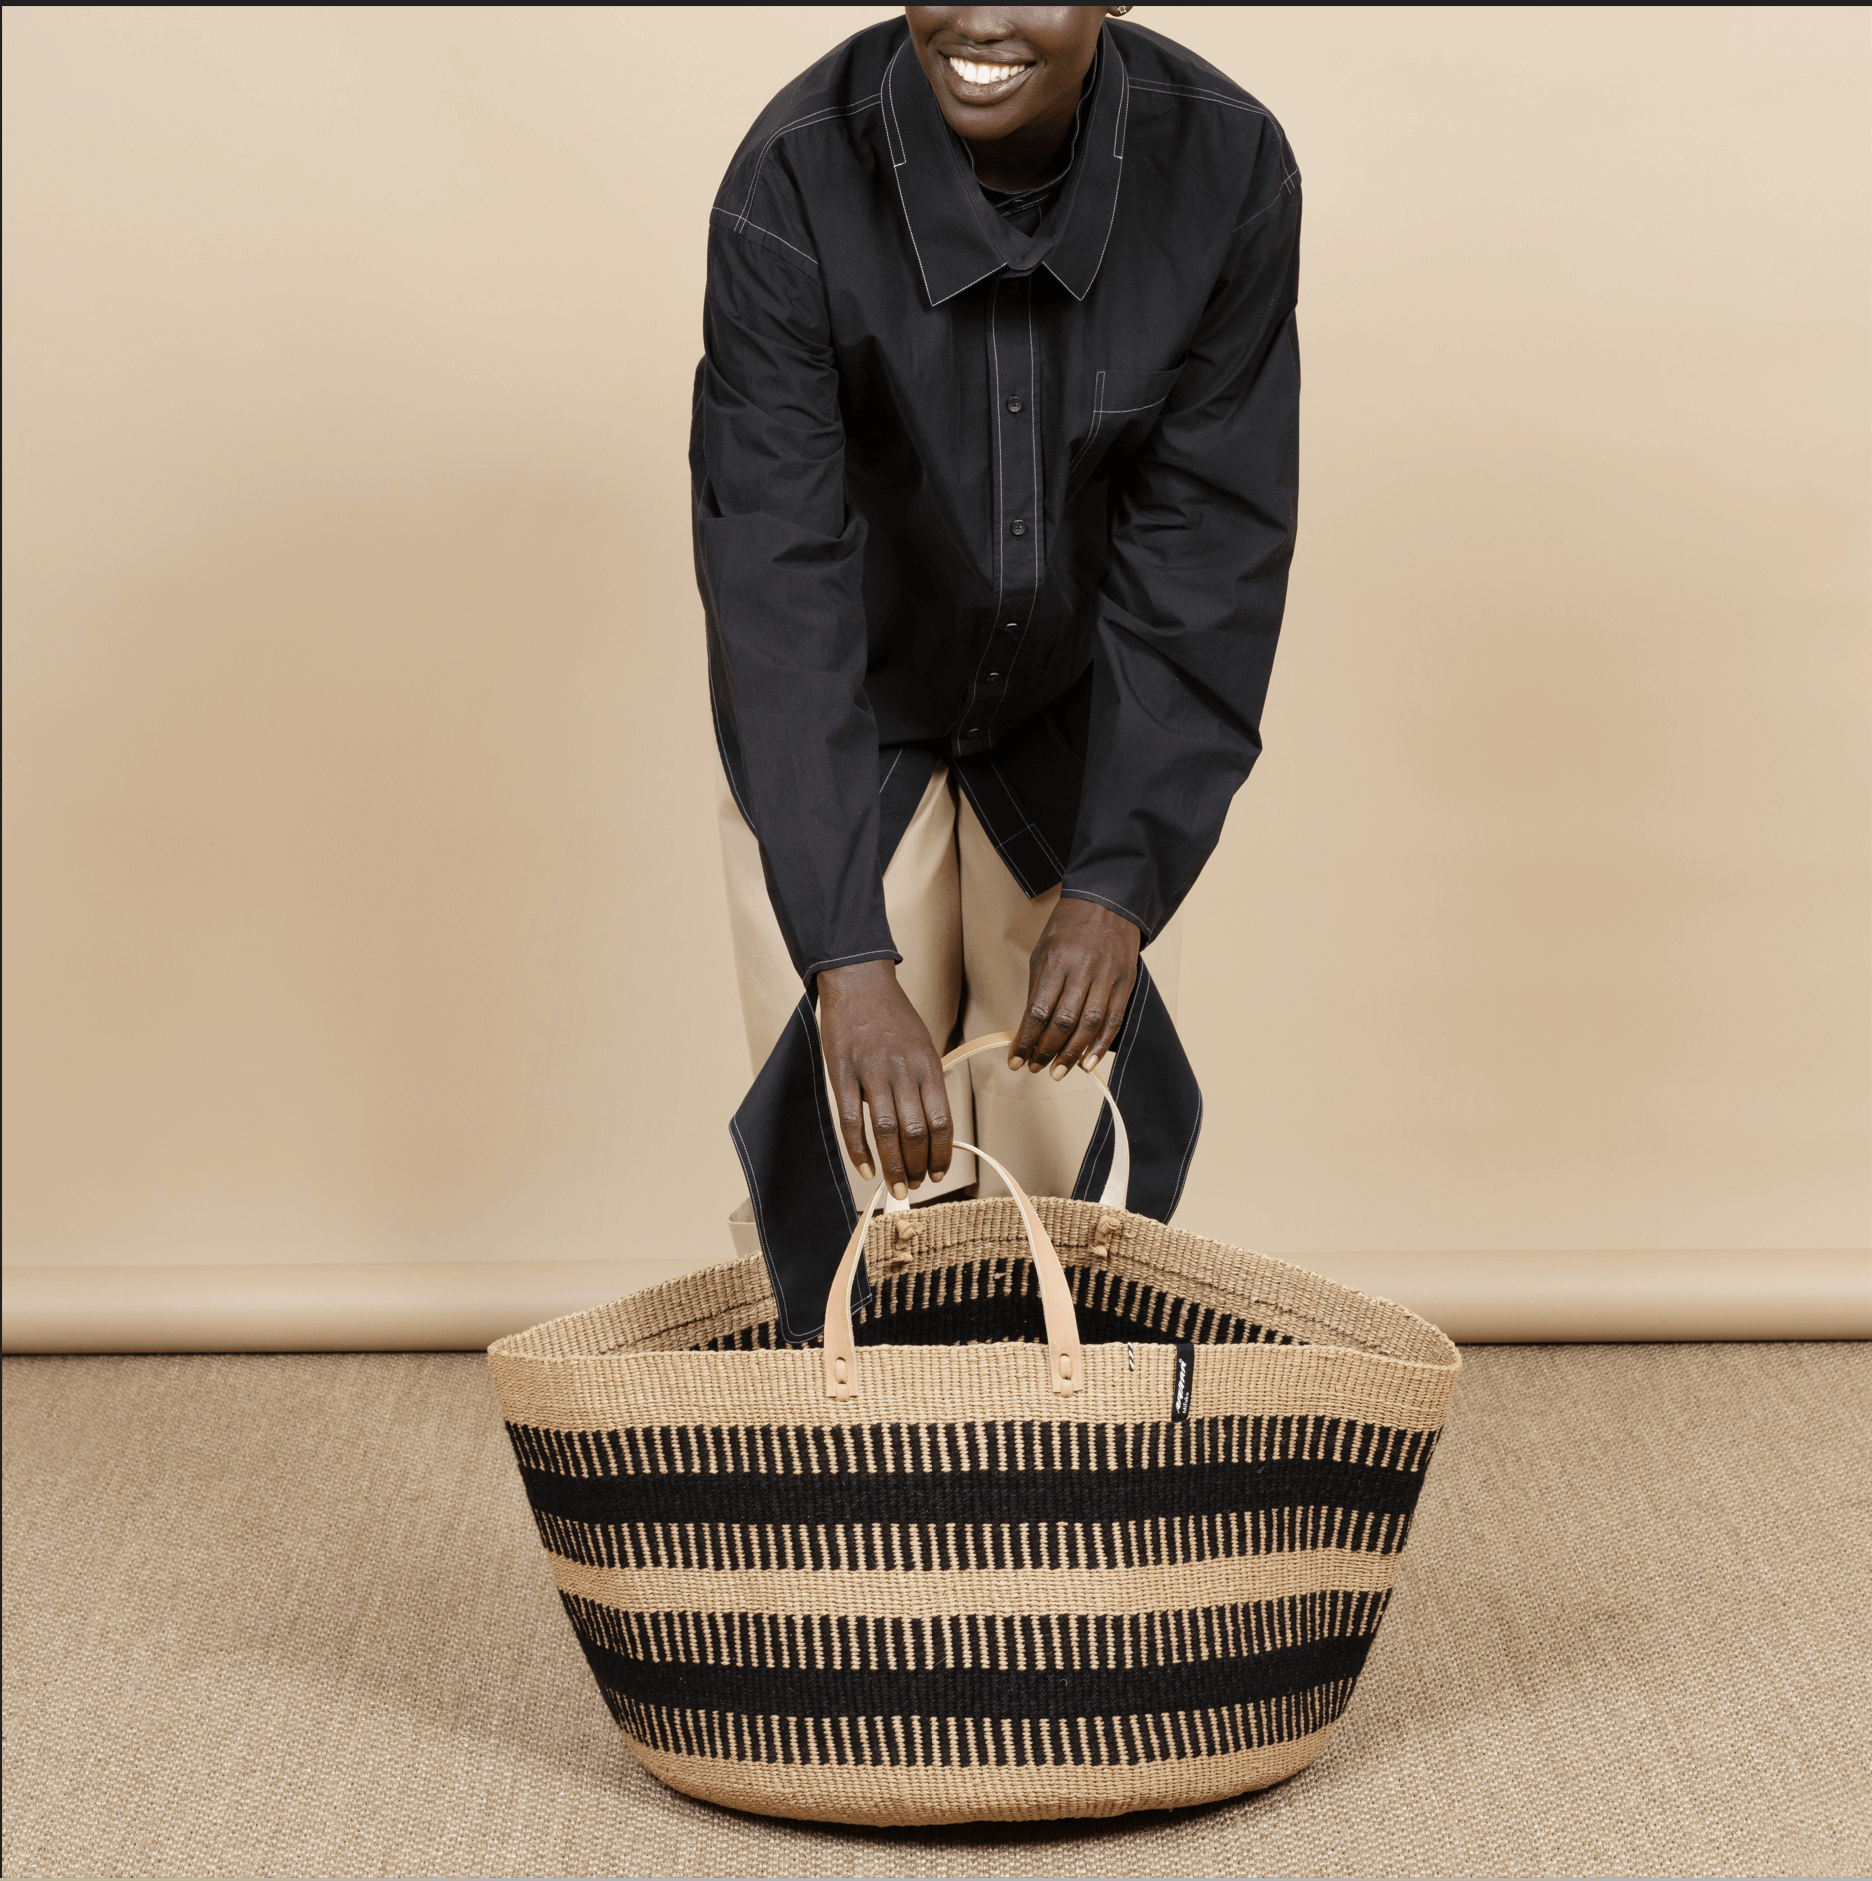 Mifuko Wool and paper Large basket with handle Pamba floor basket | Black rib weave with handles XXL